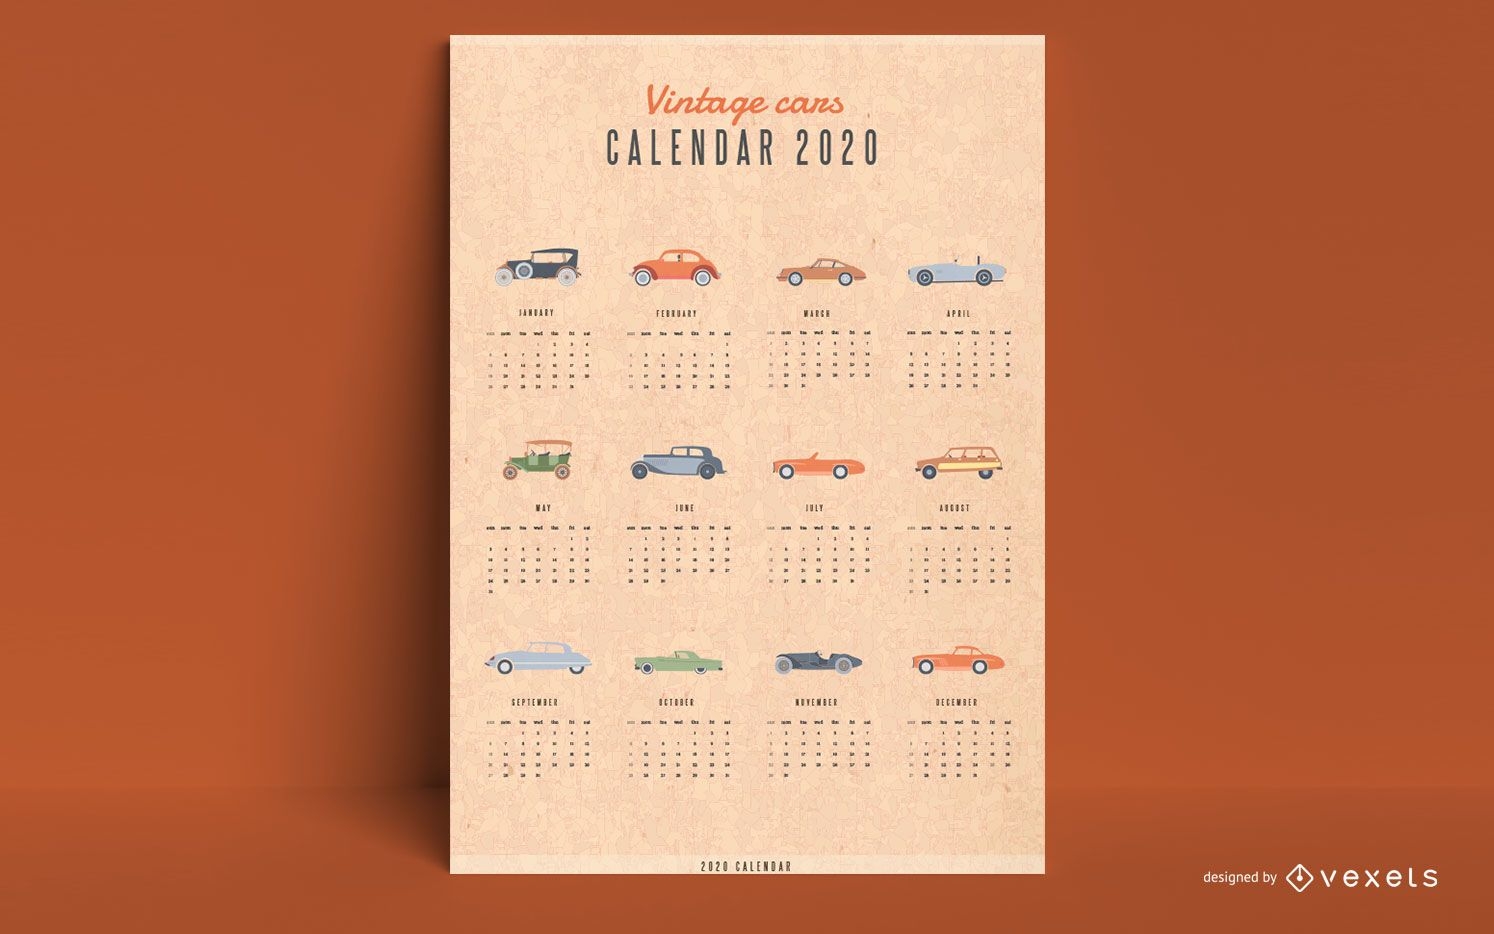 Calendar 2020 vintage cars